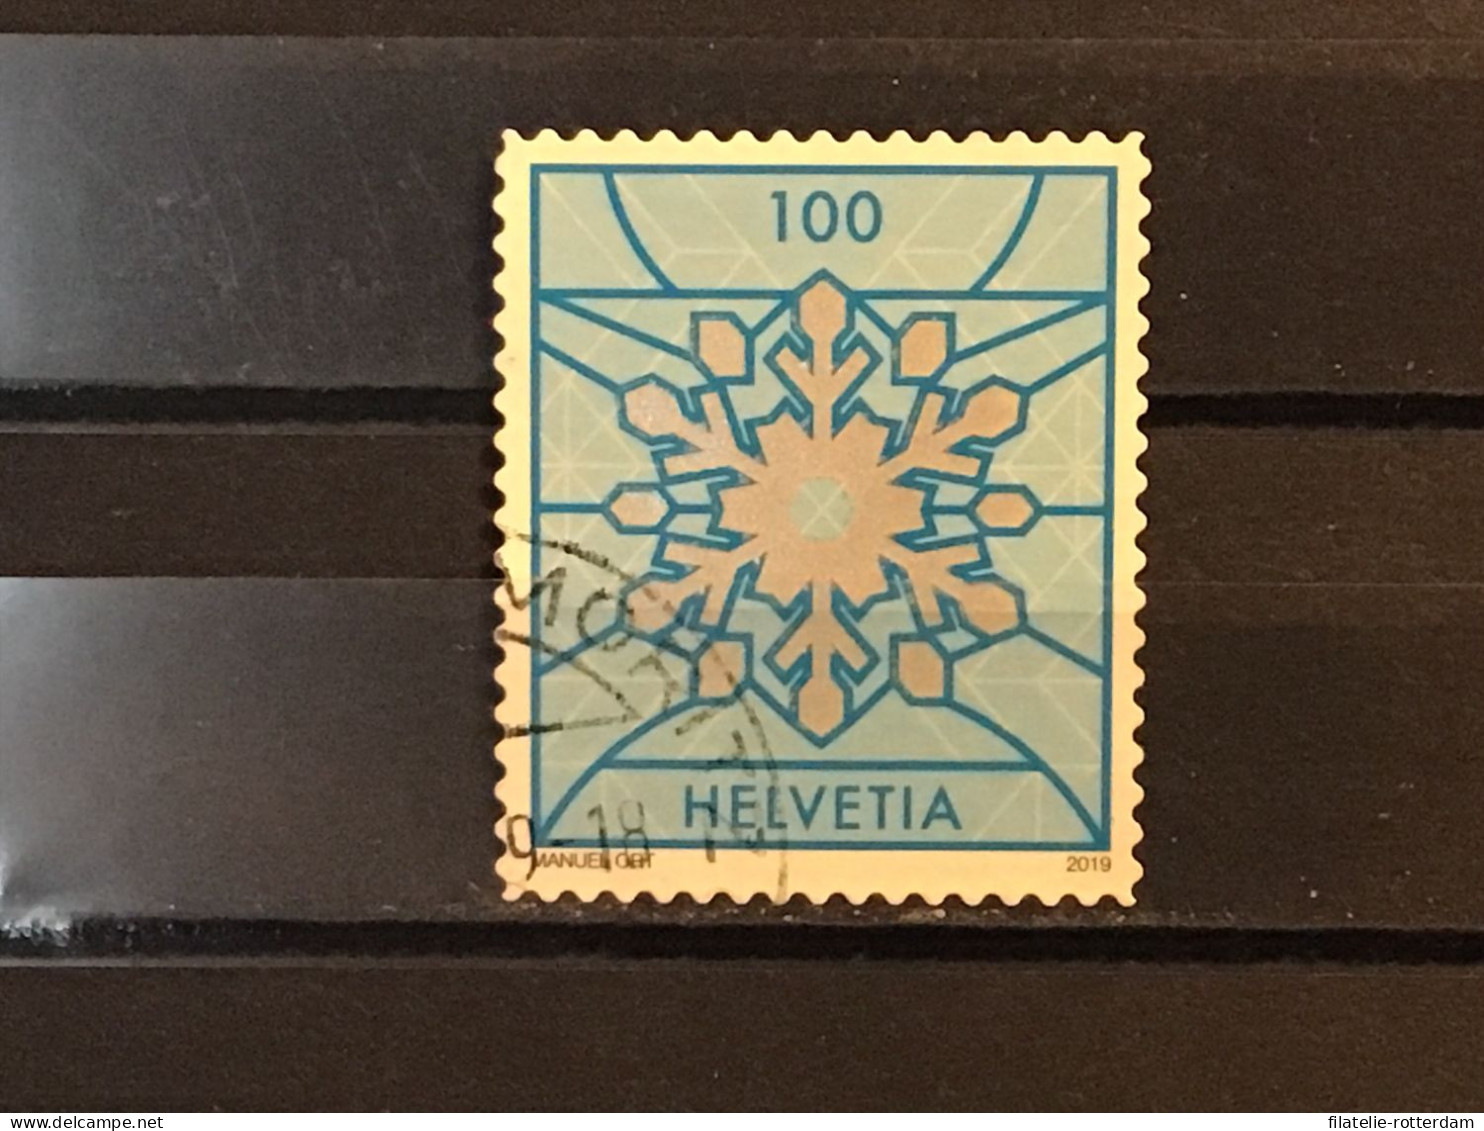 Switzerland / Zwitserland - Christmas (100) 2019 - Used Stamps